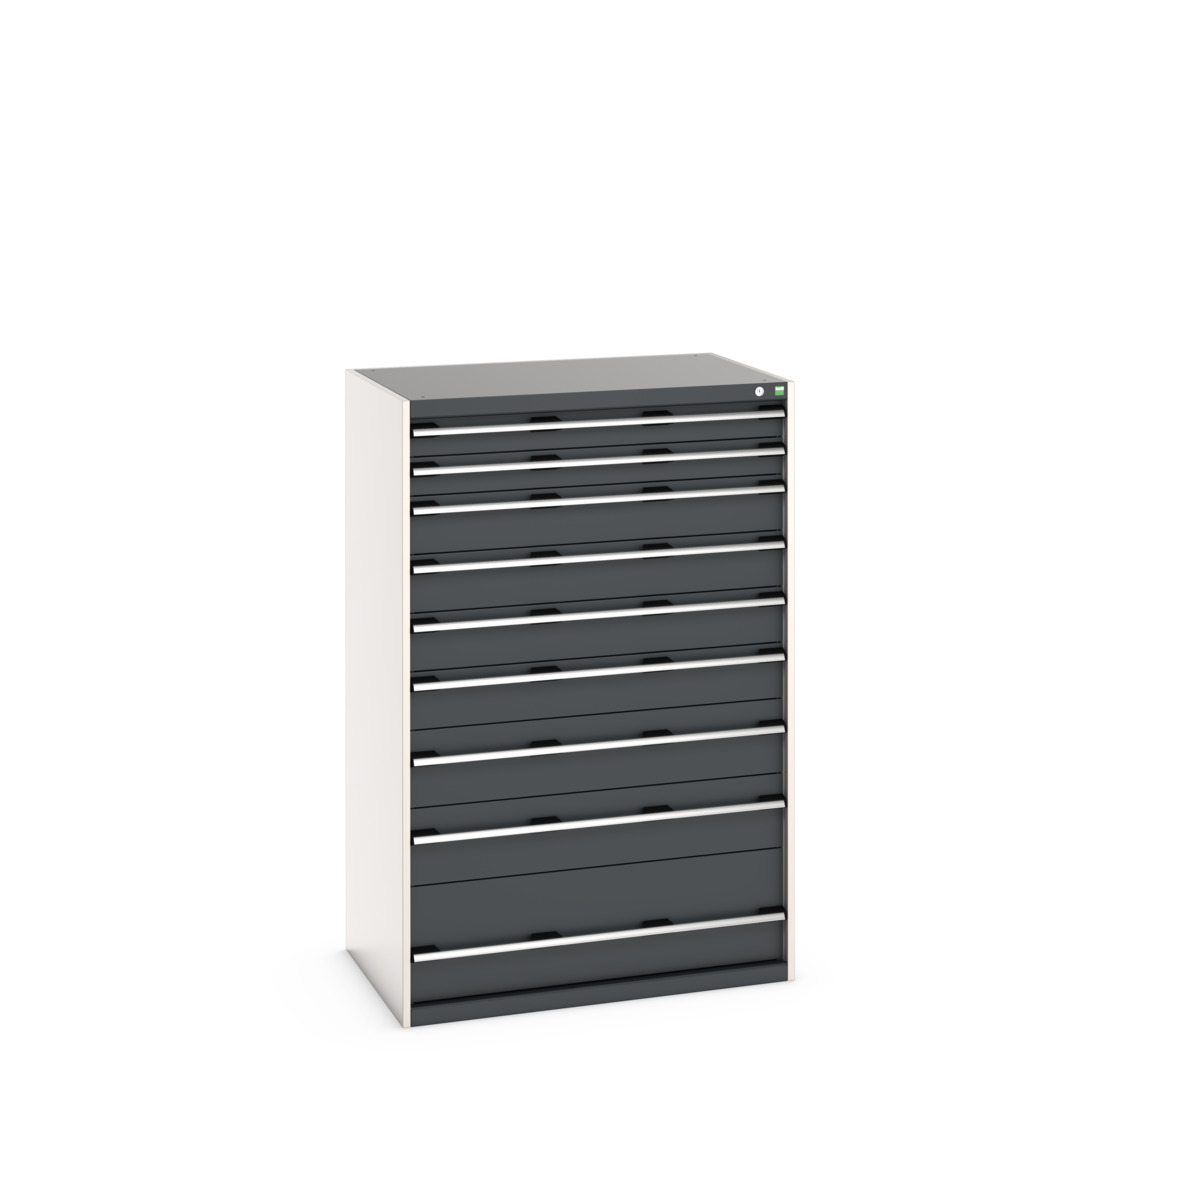 40029036. - cubio drawer cabinet